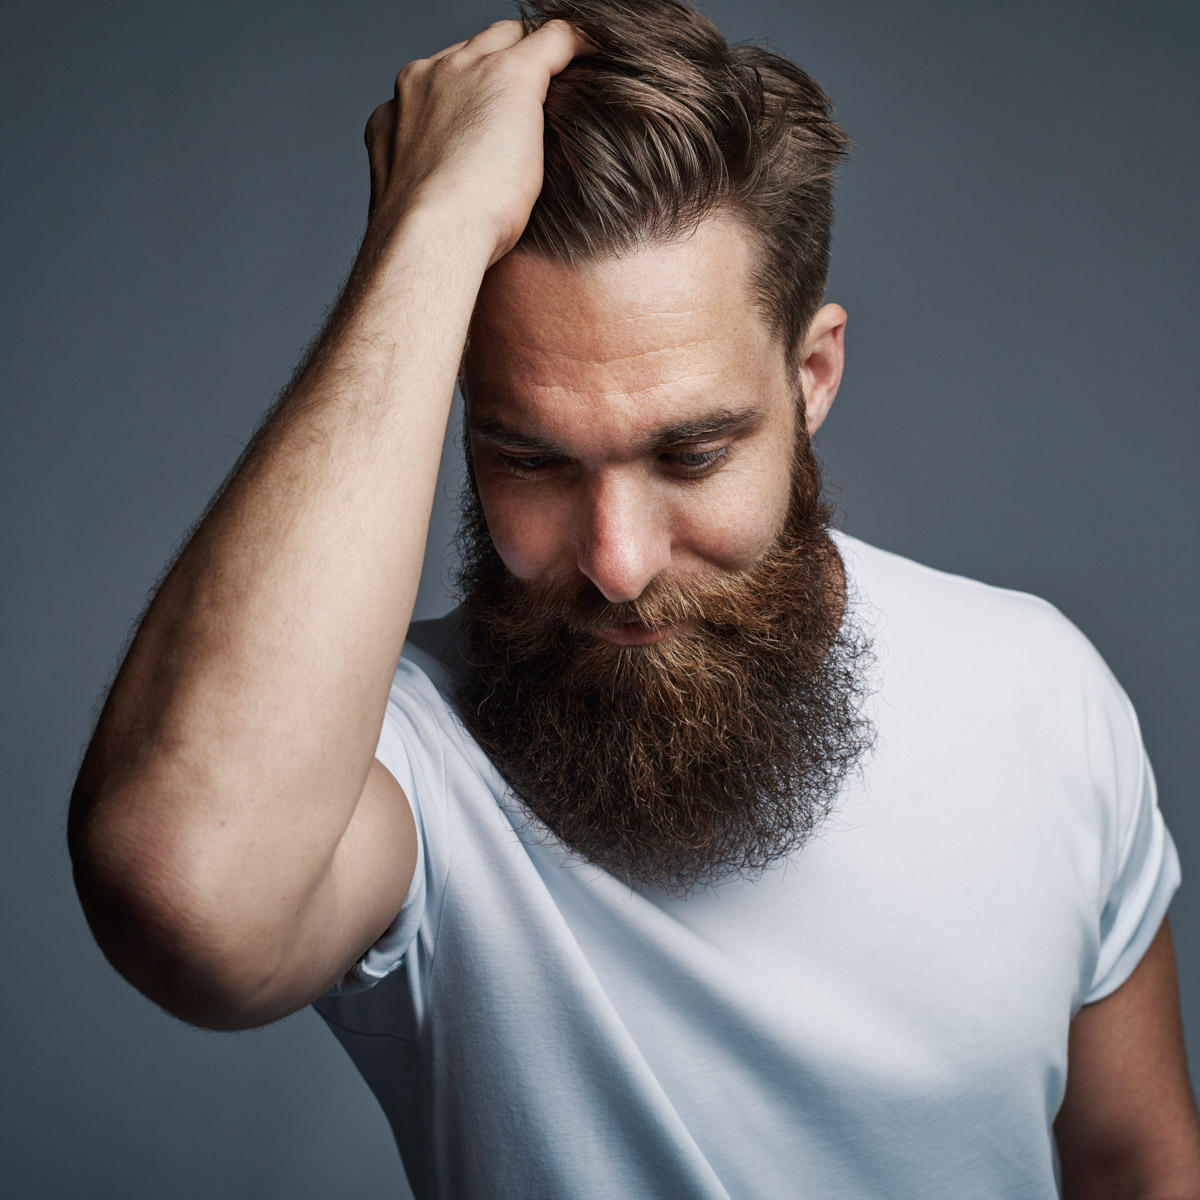 7 Healthy Hair Tips For Men